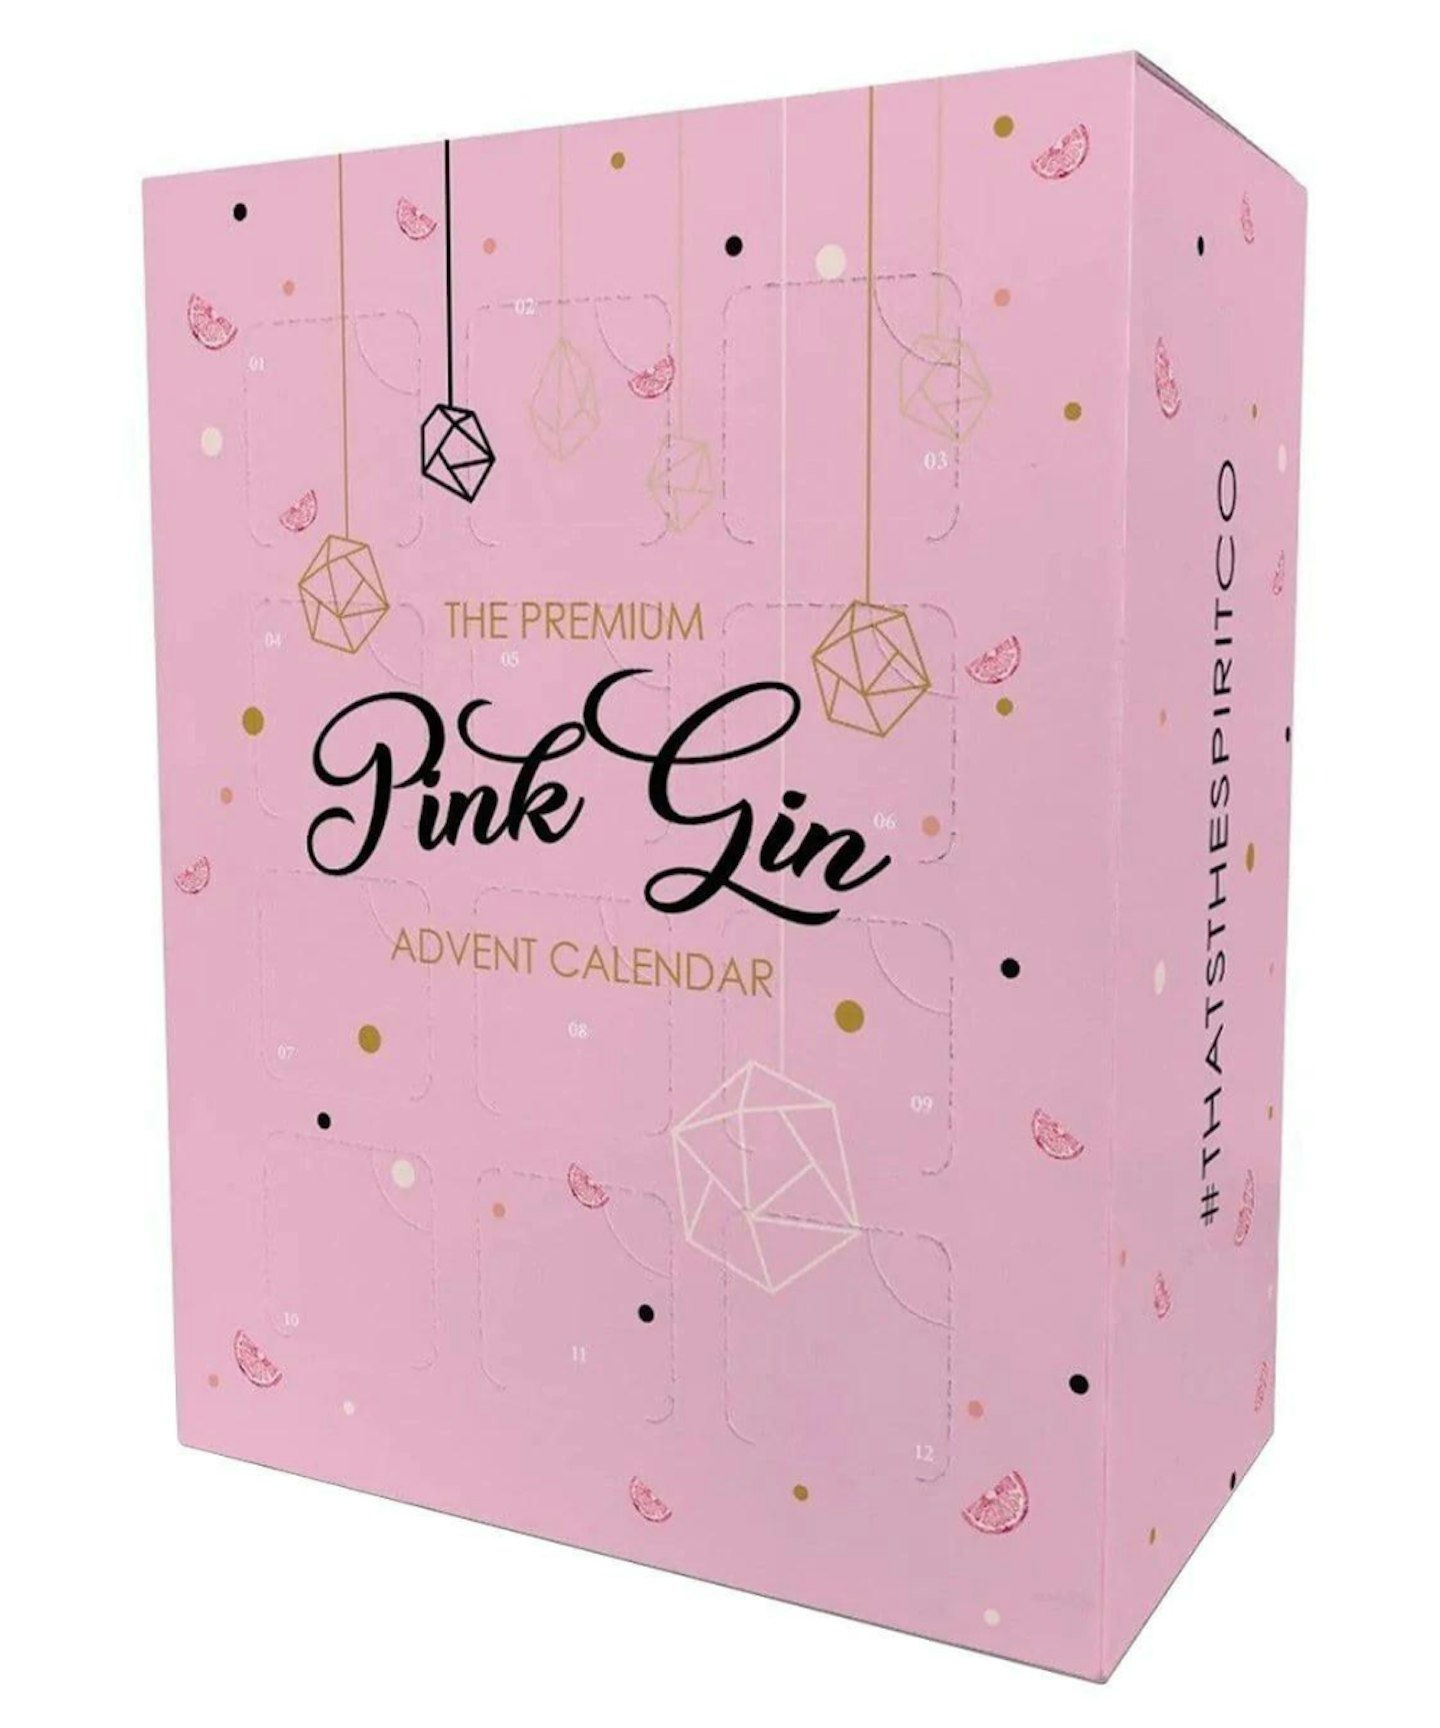 The Premium Pink Gin Advent Calendar